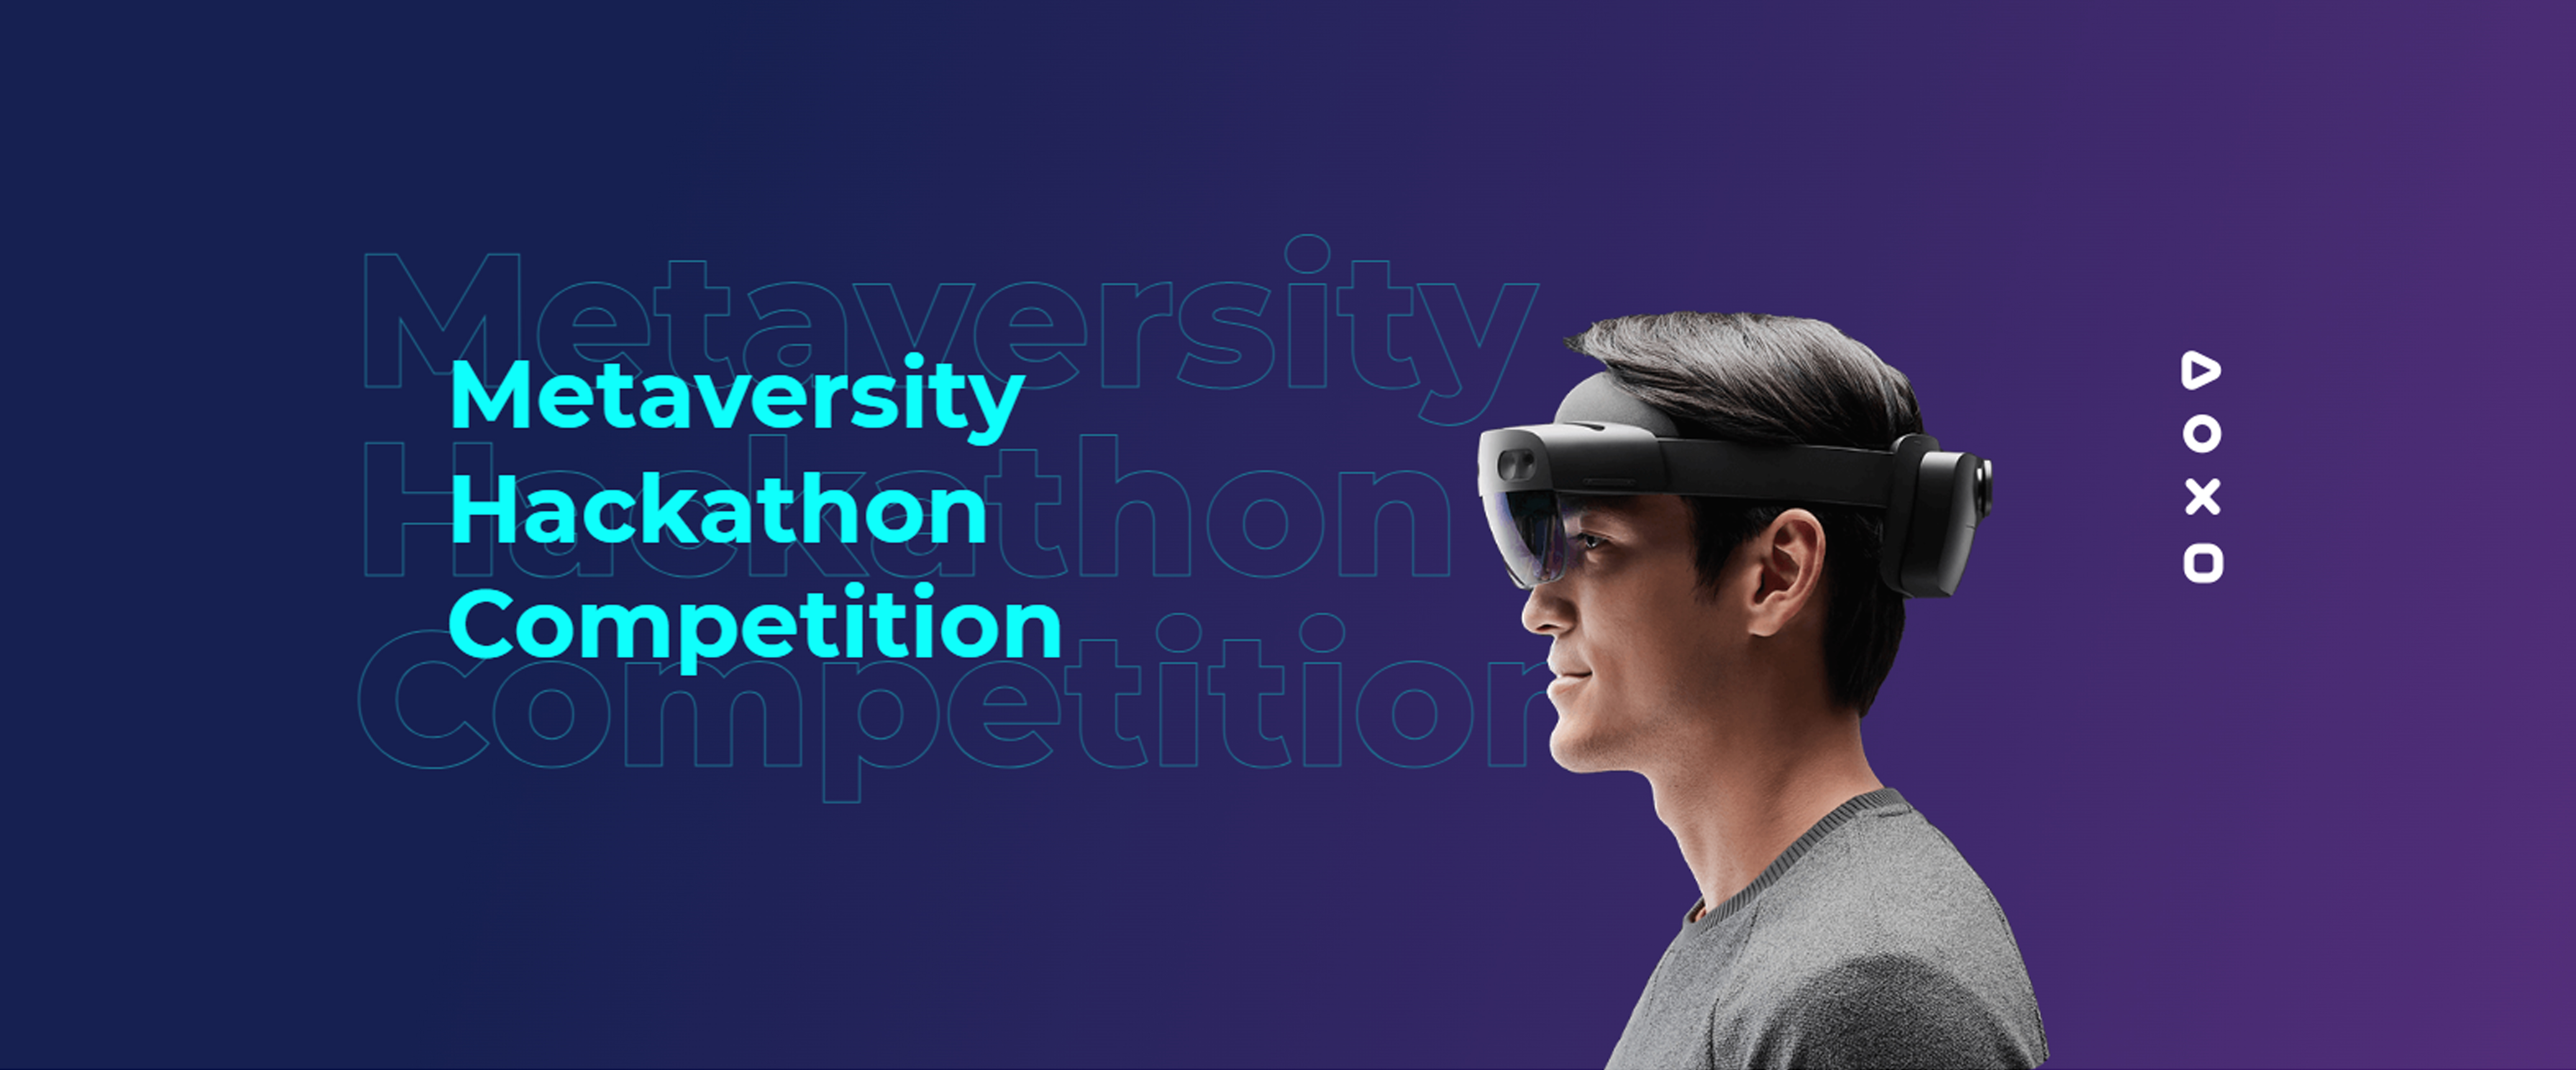 Khalifa University Launches Metaversity Hackathon Supported by Microsoft UAE and Hevolus Innovation